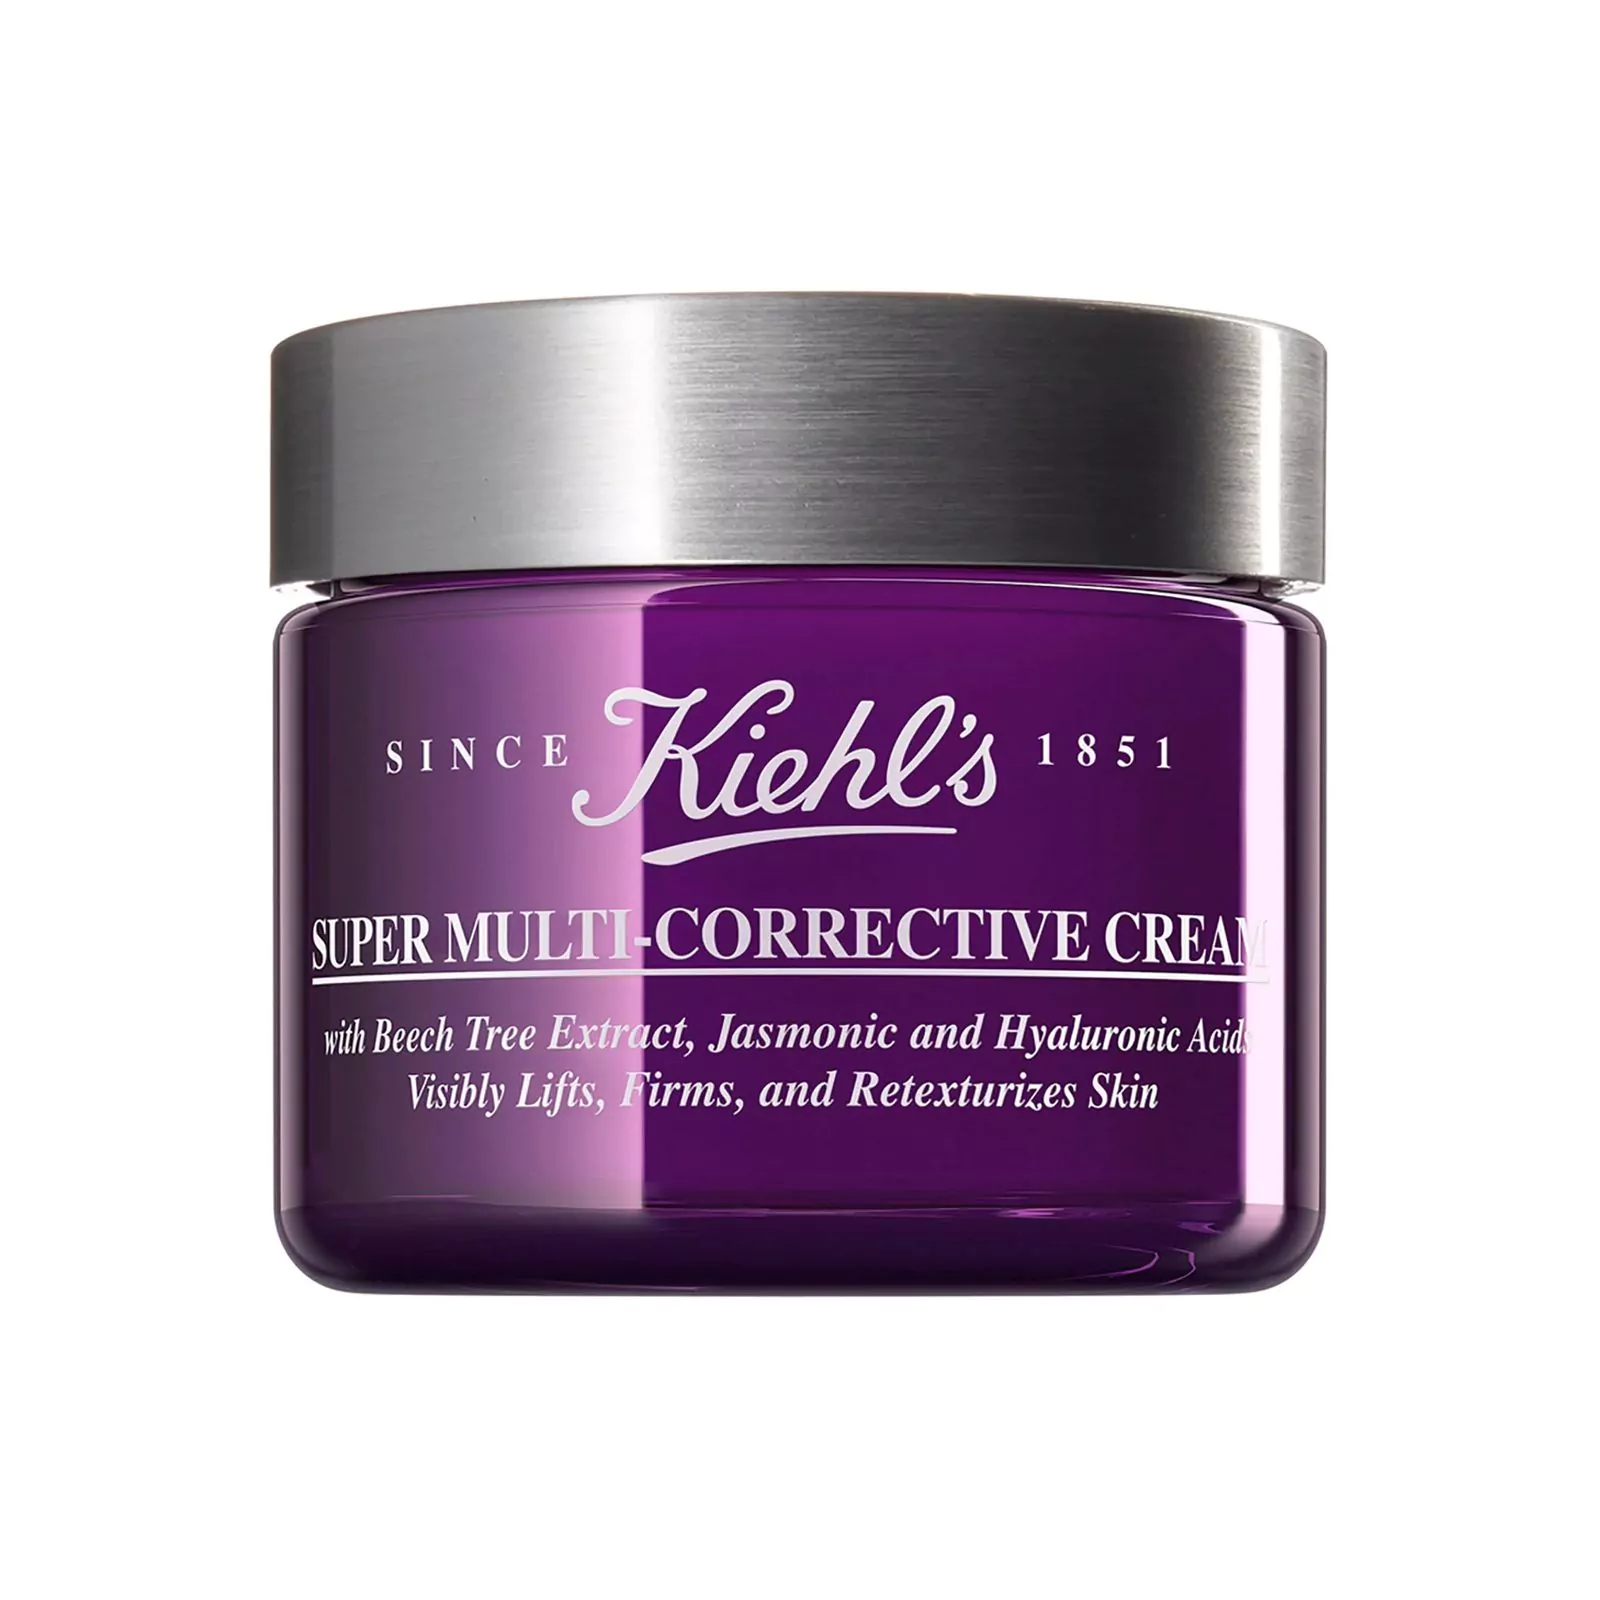 Kiehl’s Super Multi-Corrective Anti-Aging Cream for Face and Neck